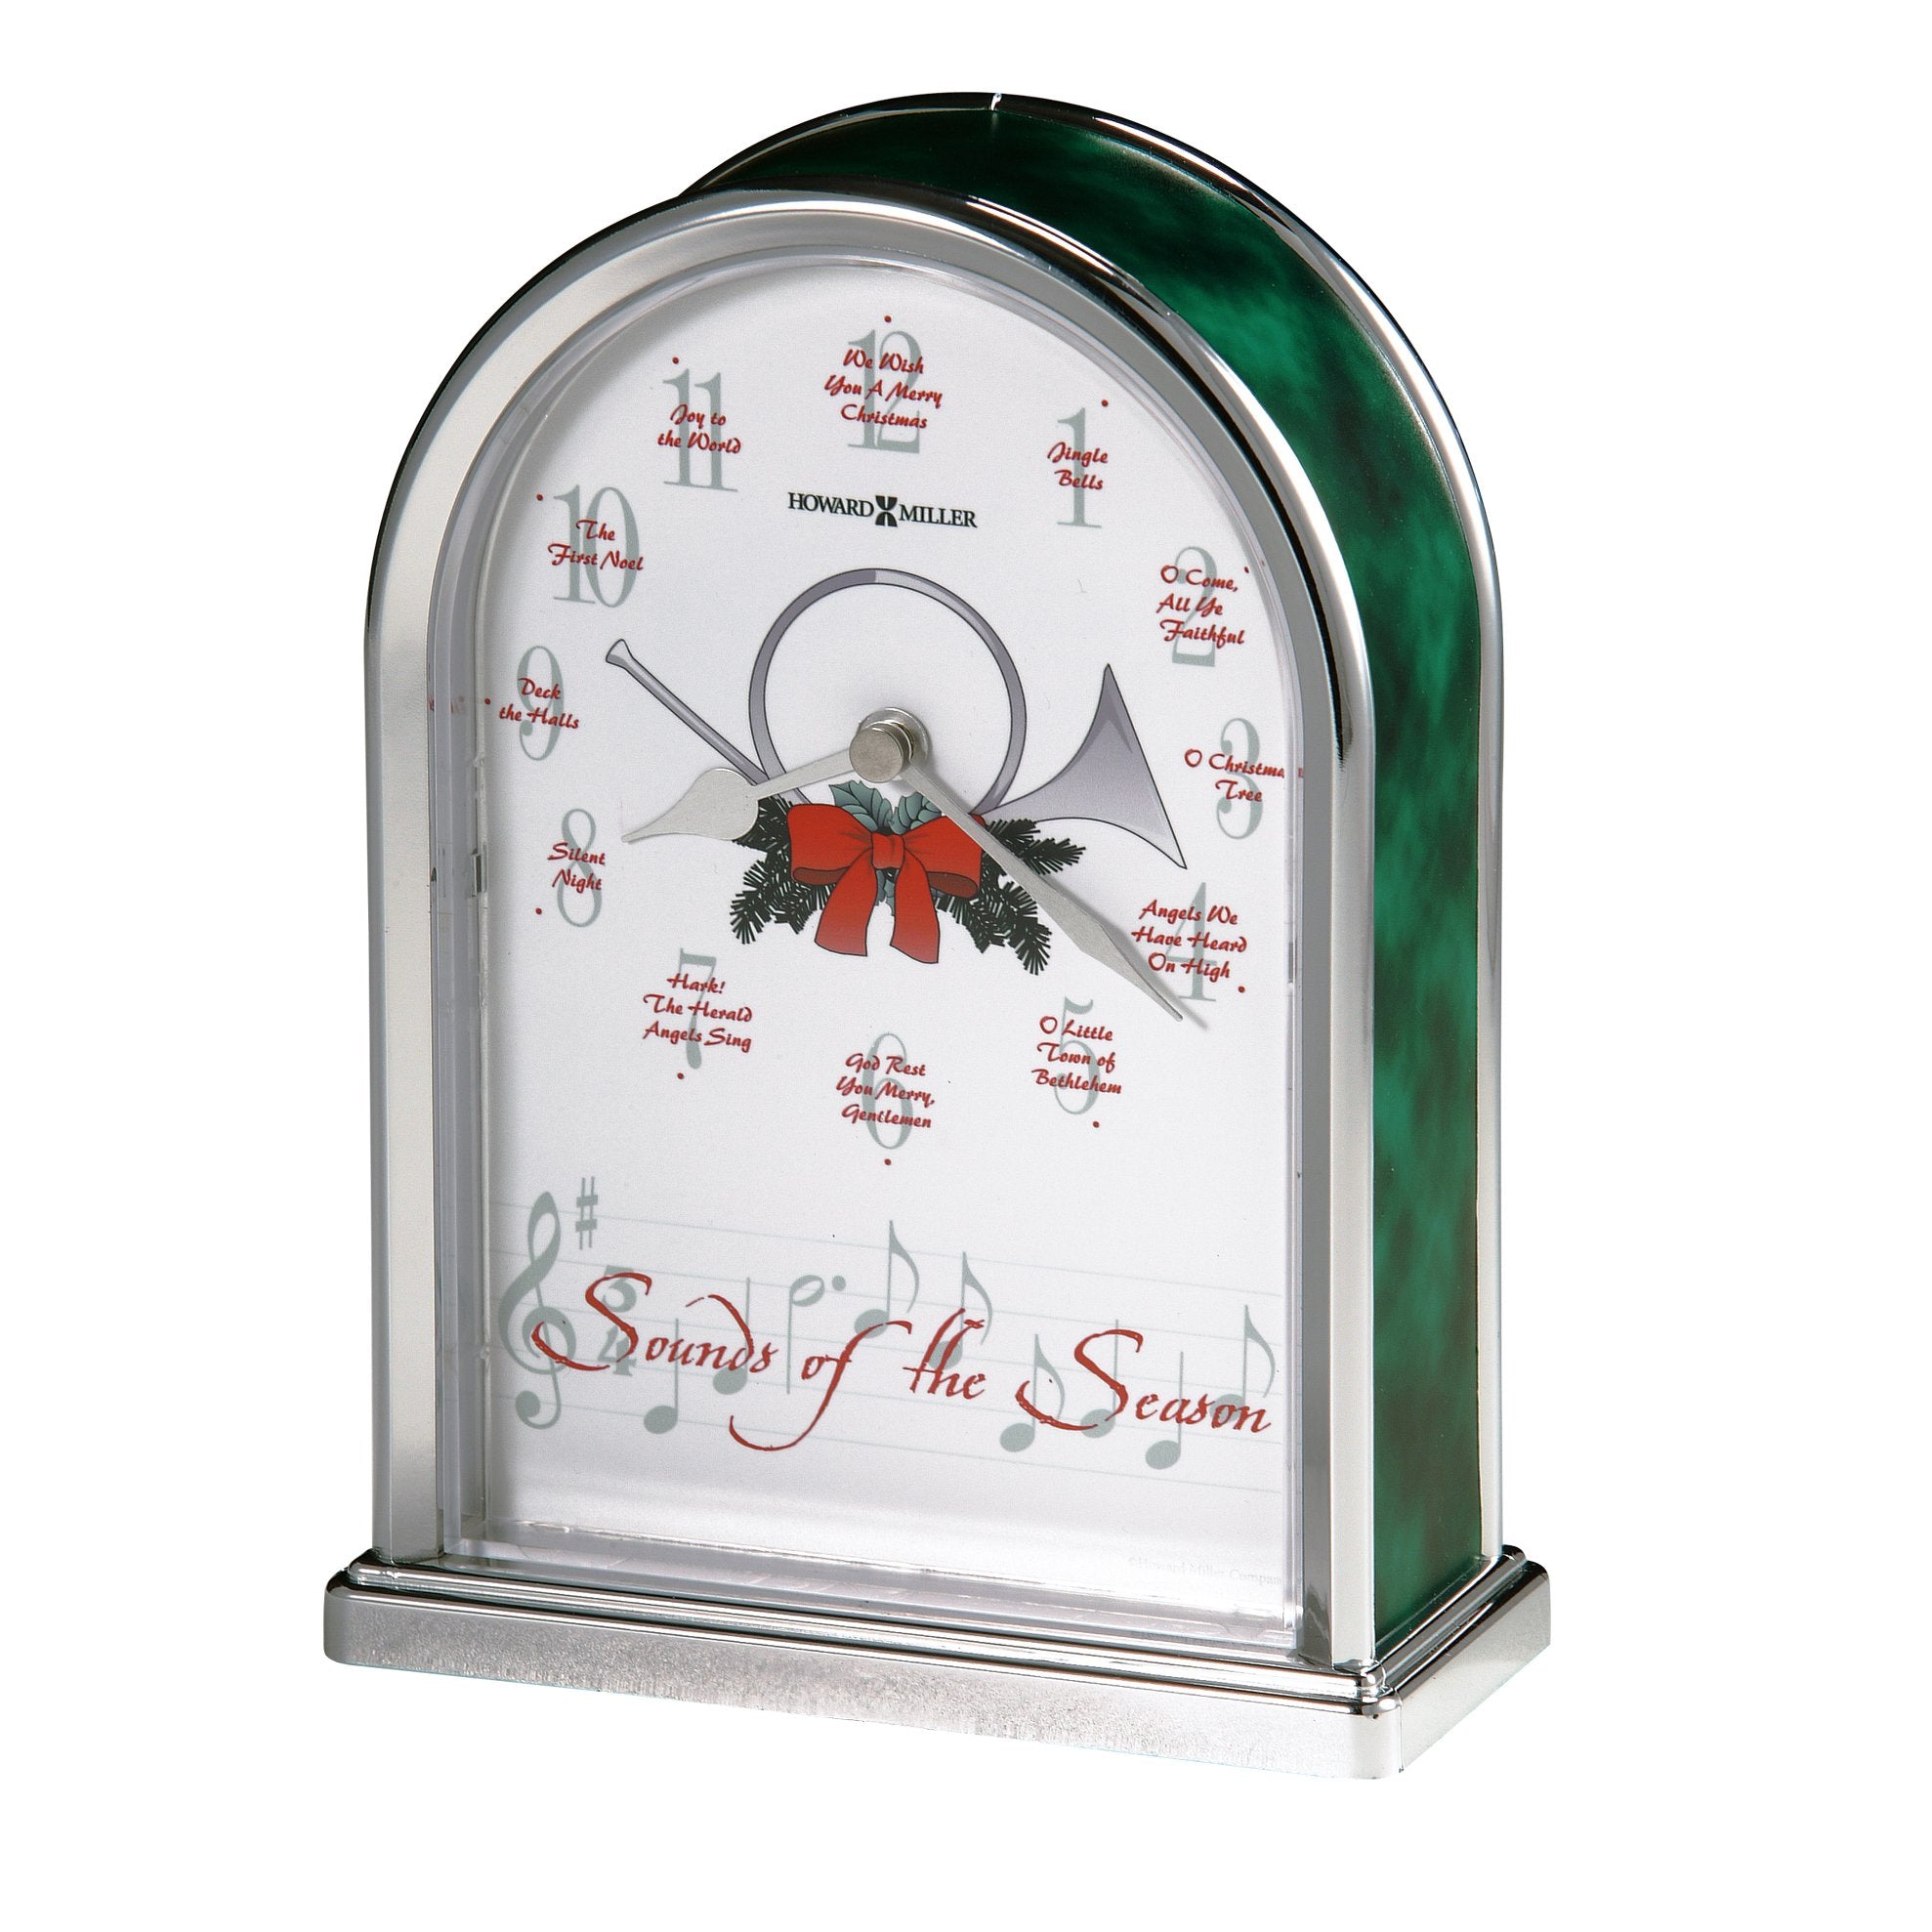 Howard Miller Sounds of the Season Table Clock 645687 - Premier Clocks